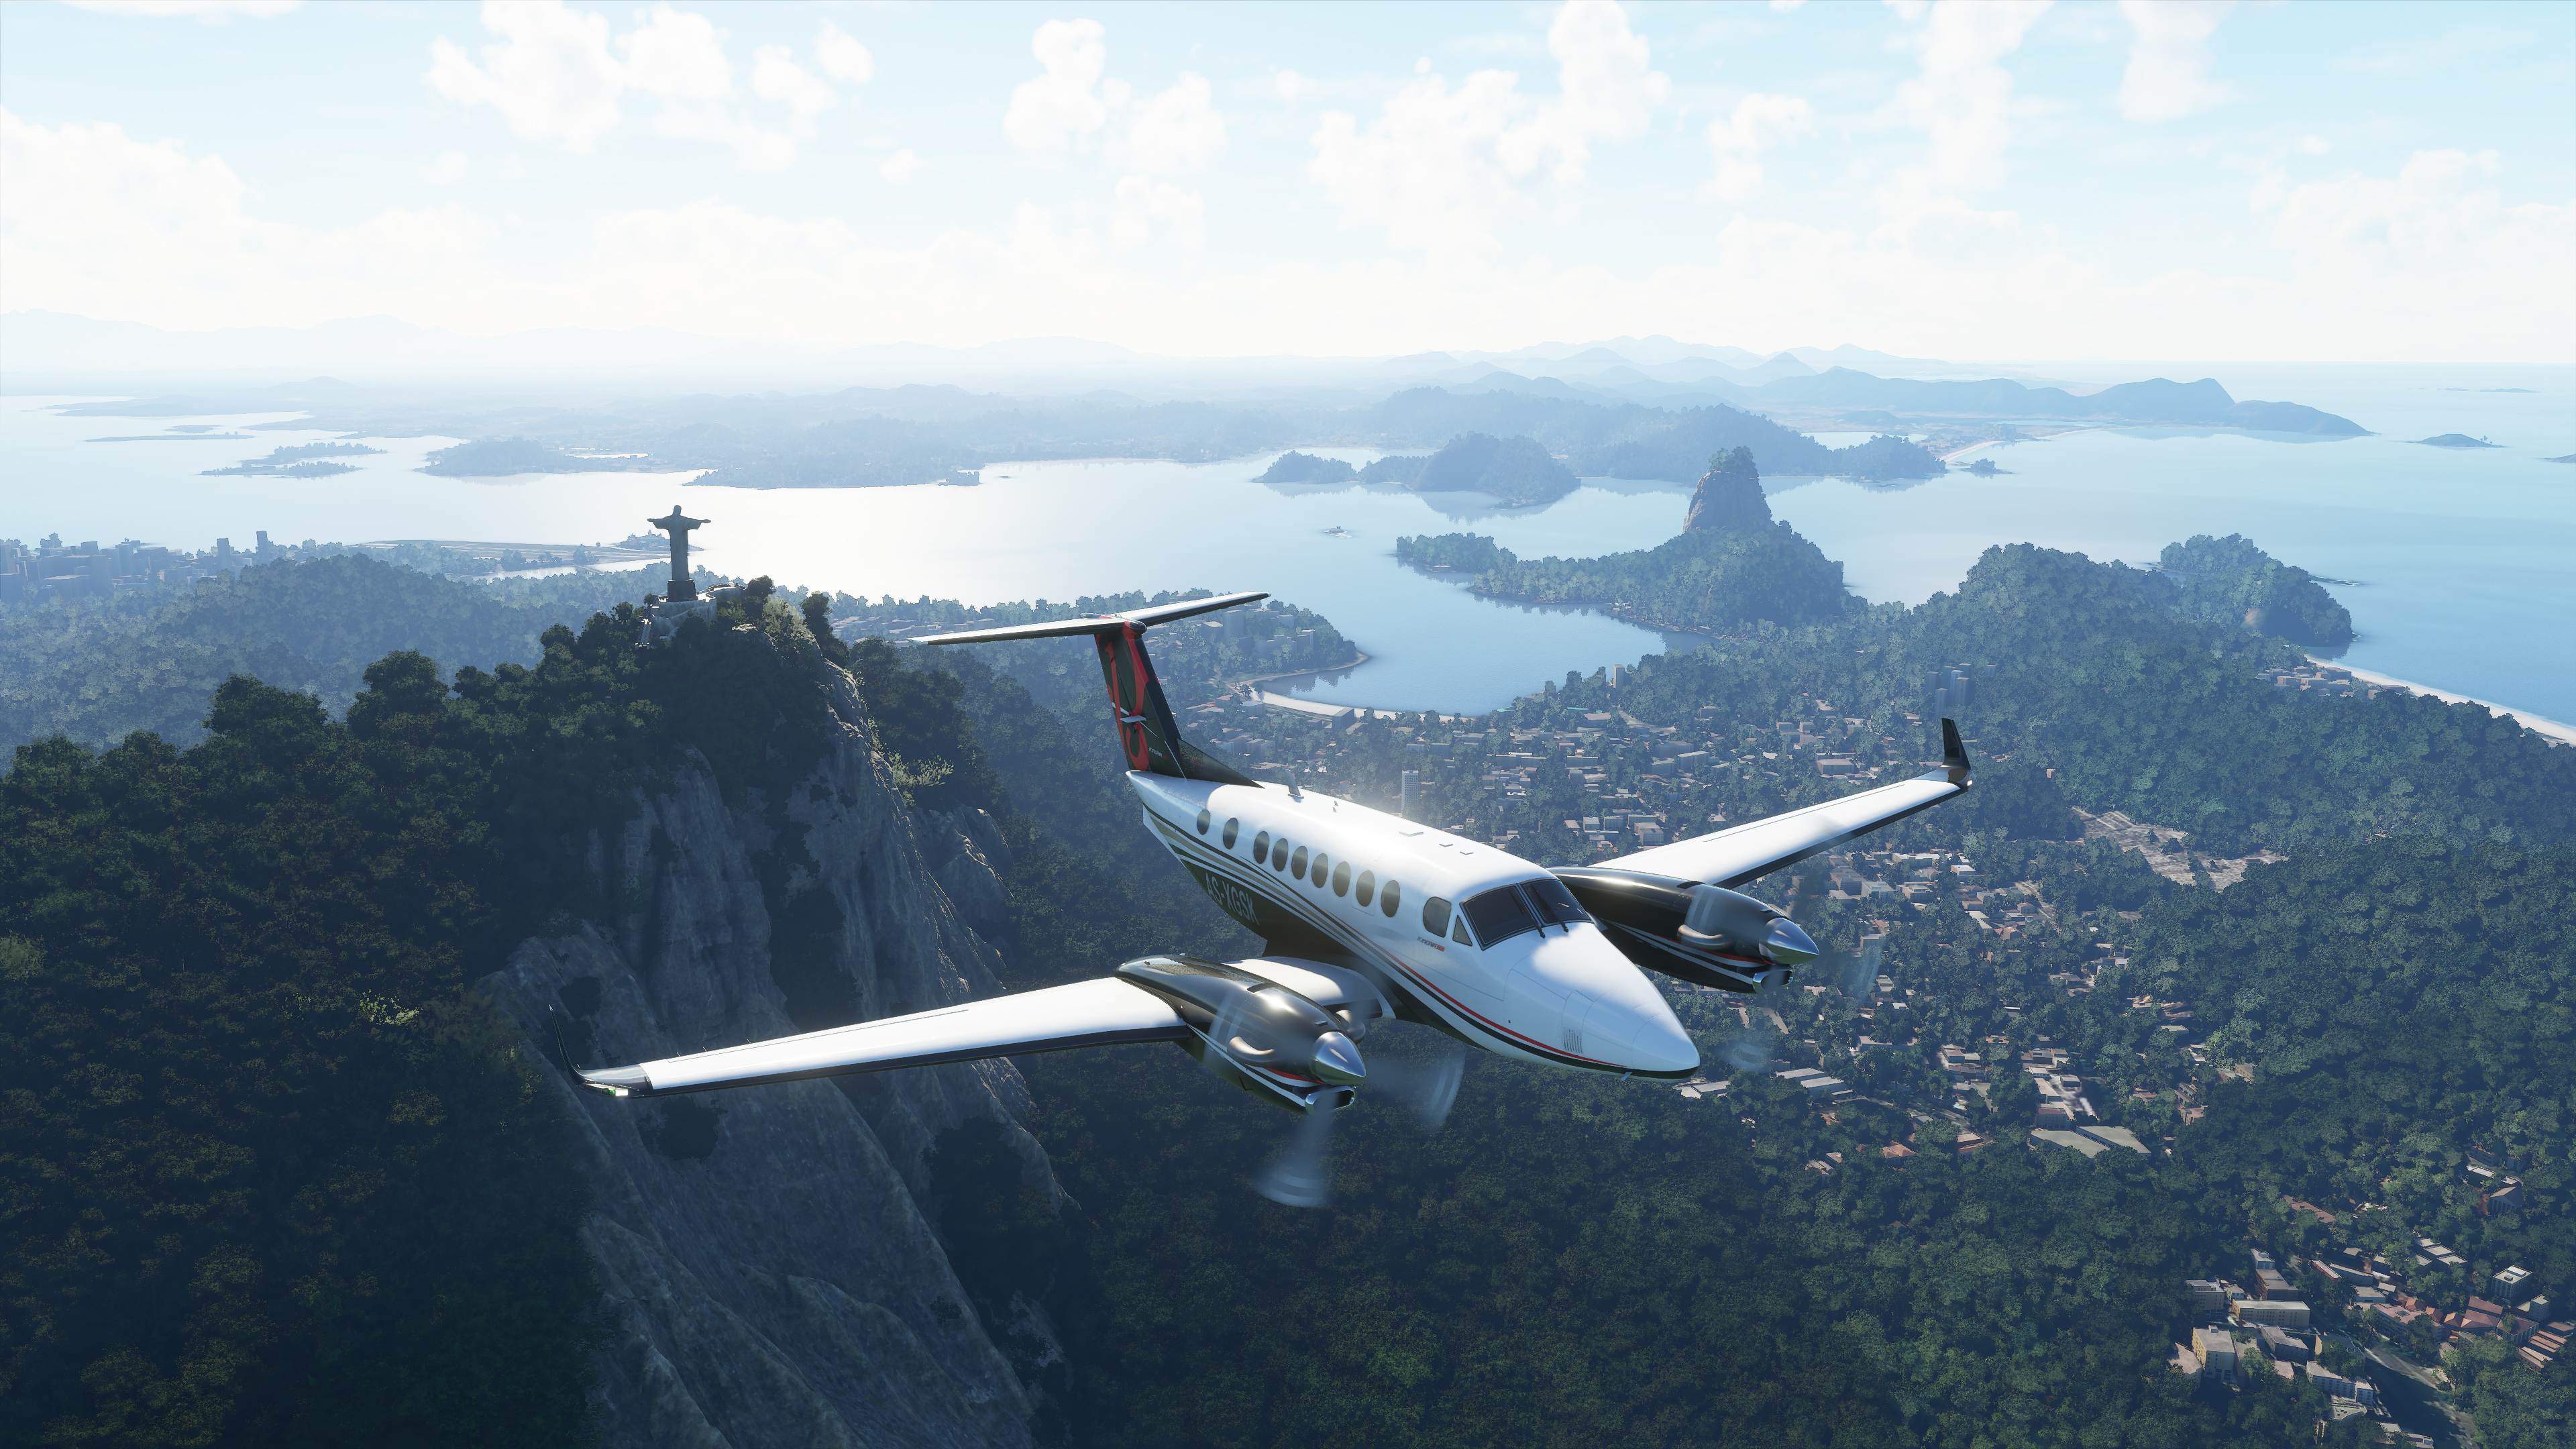 How To Cut Microsoft Flight Simulator's Xbox Game Size In HALF